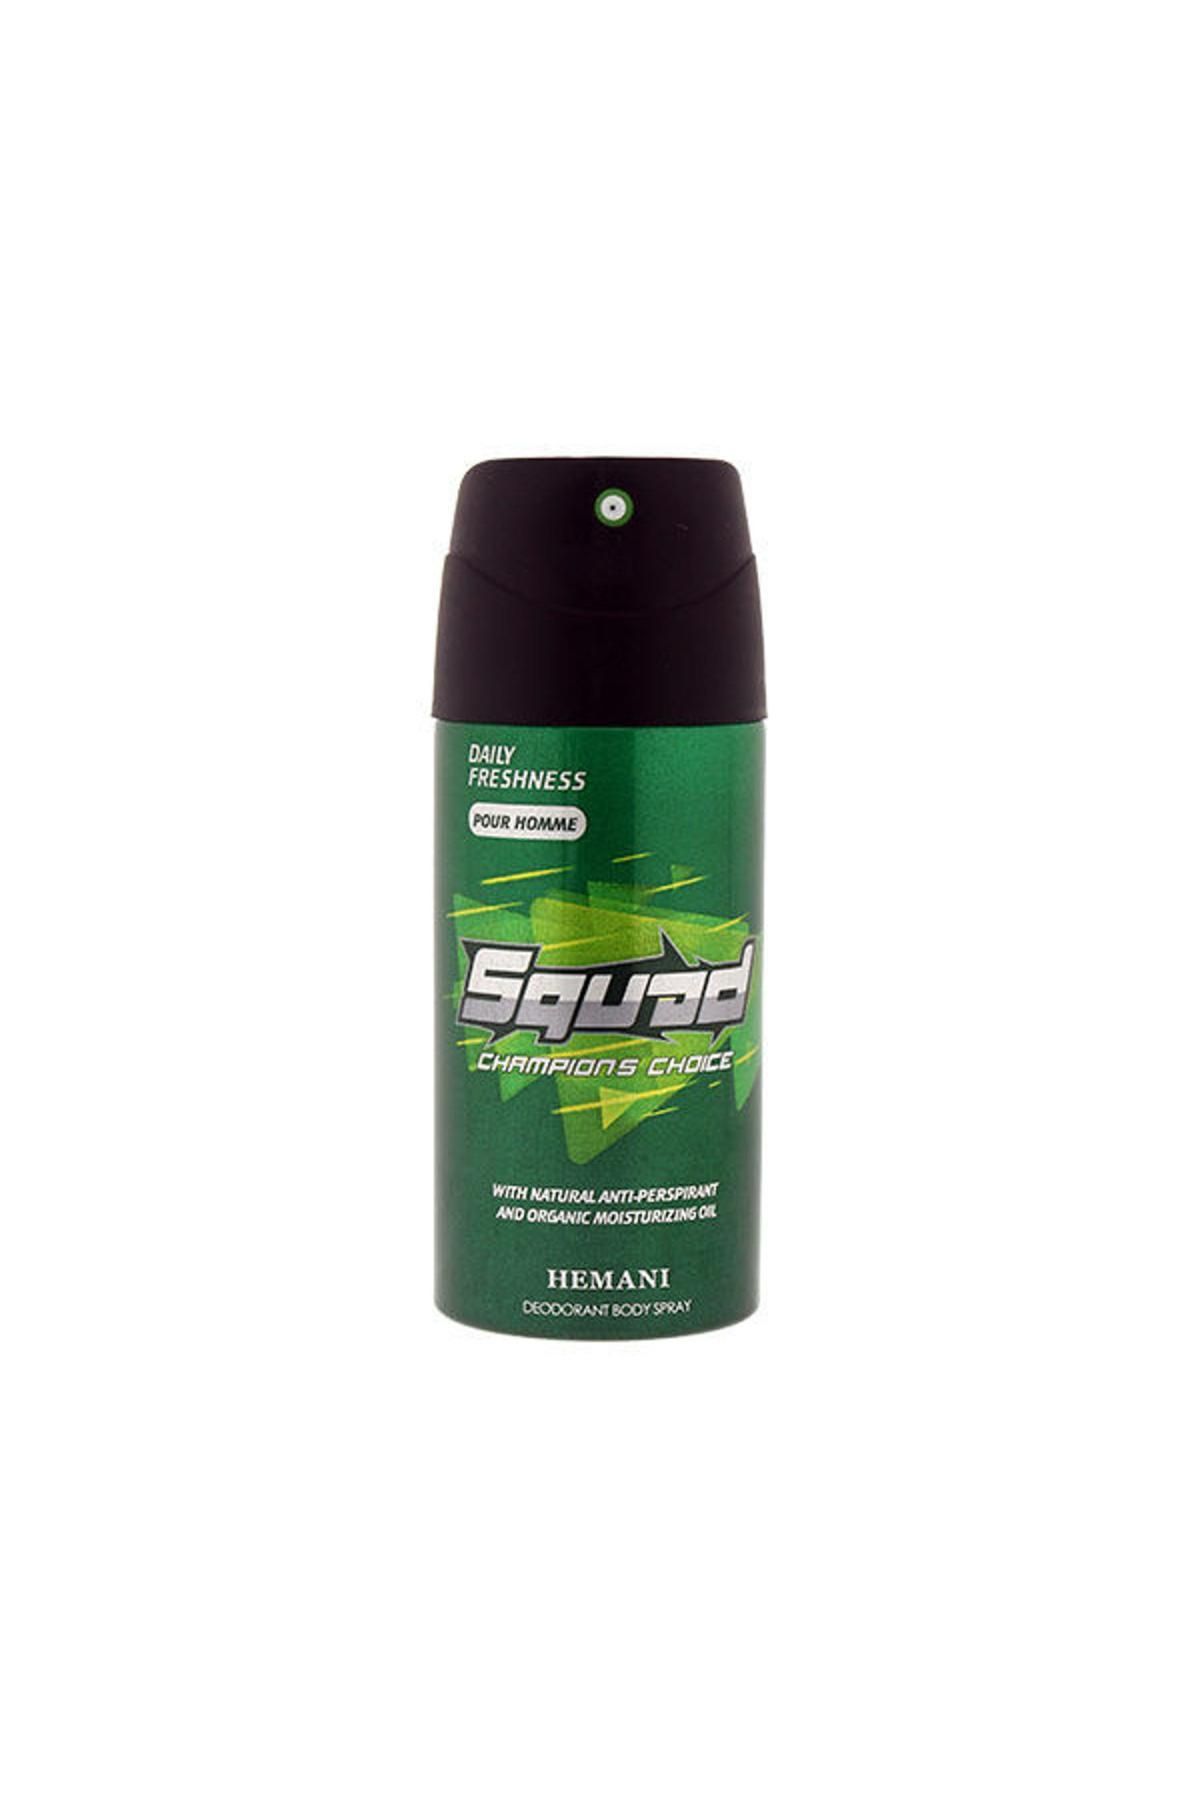 Hemani Squad Deodorant Spray Champion's Choice for Men